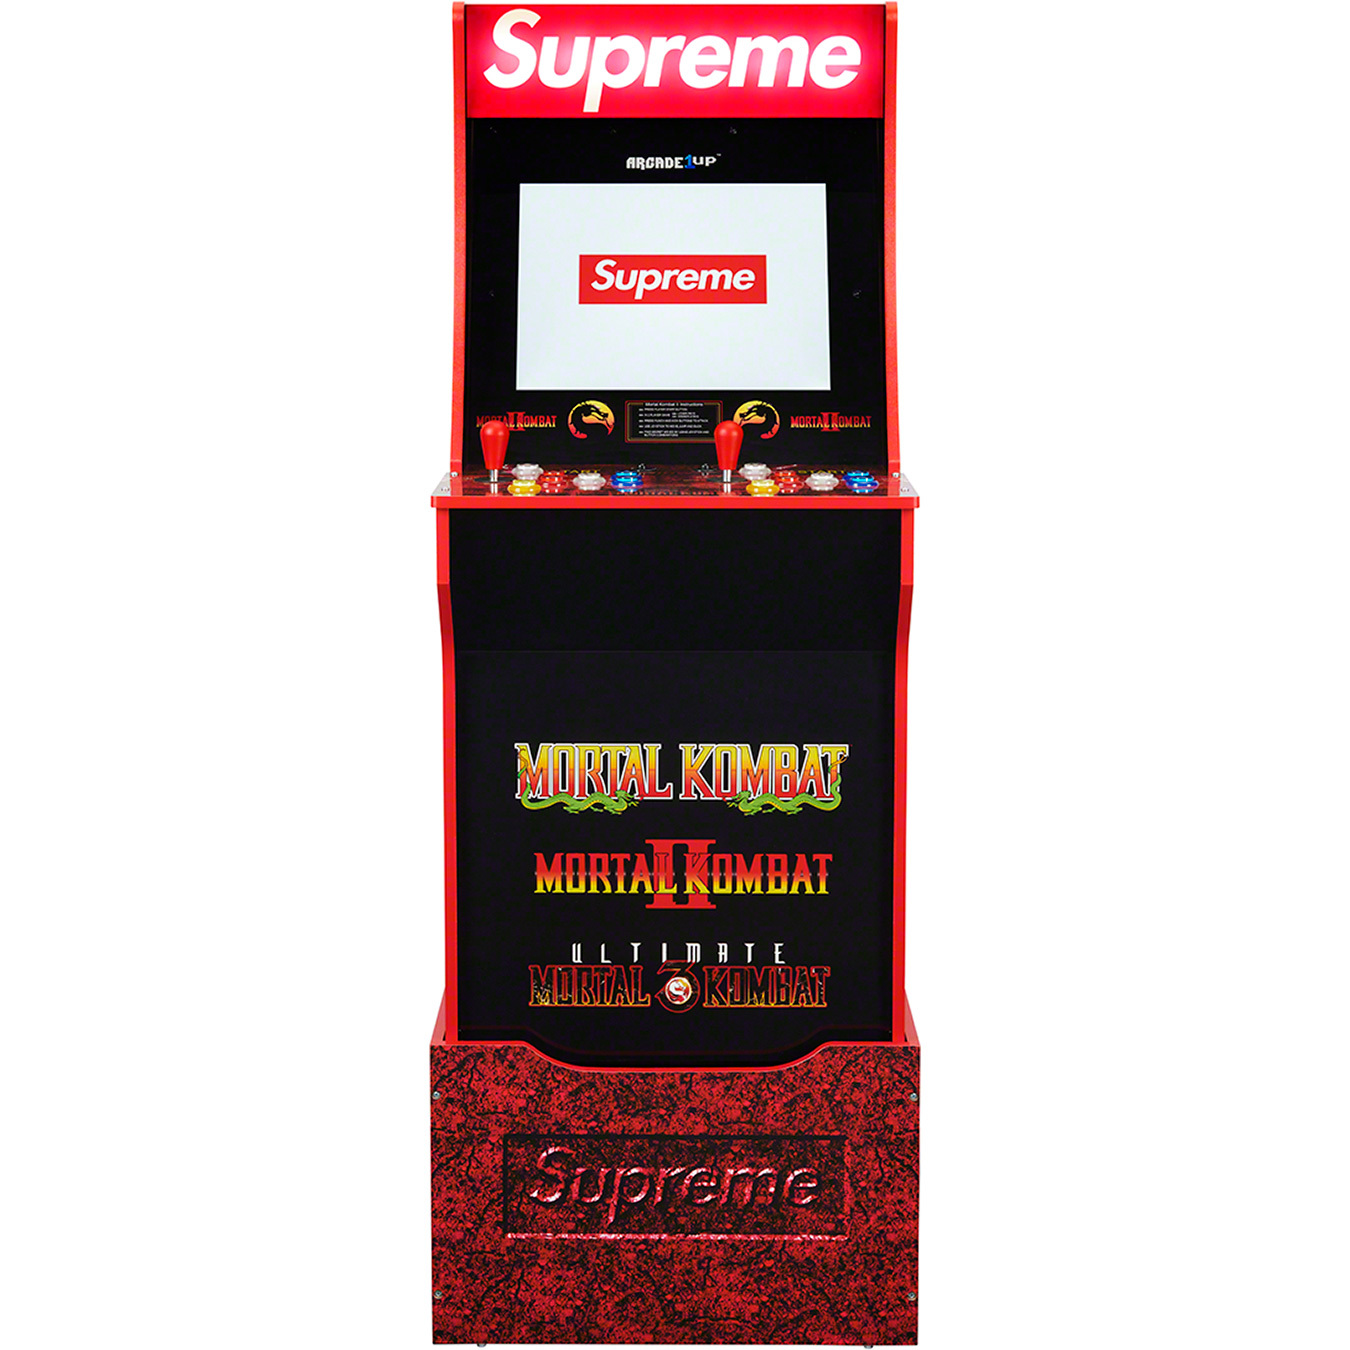 Supreme®/Mortal Kombat by Arcade1UP